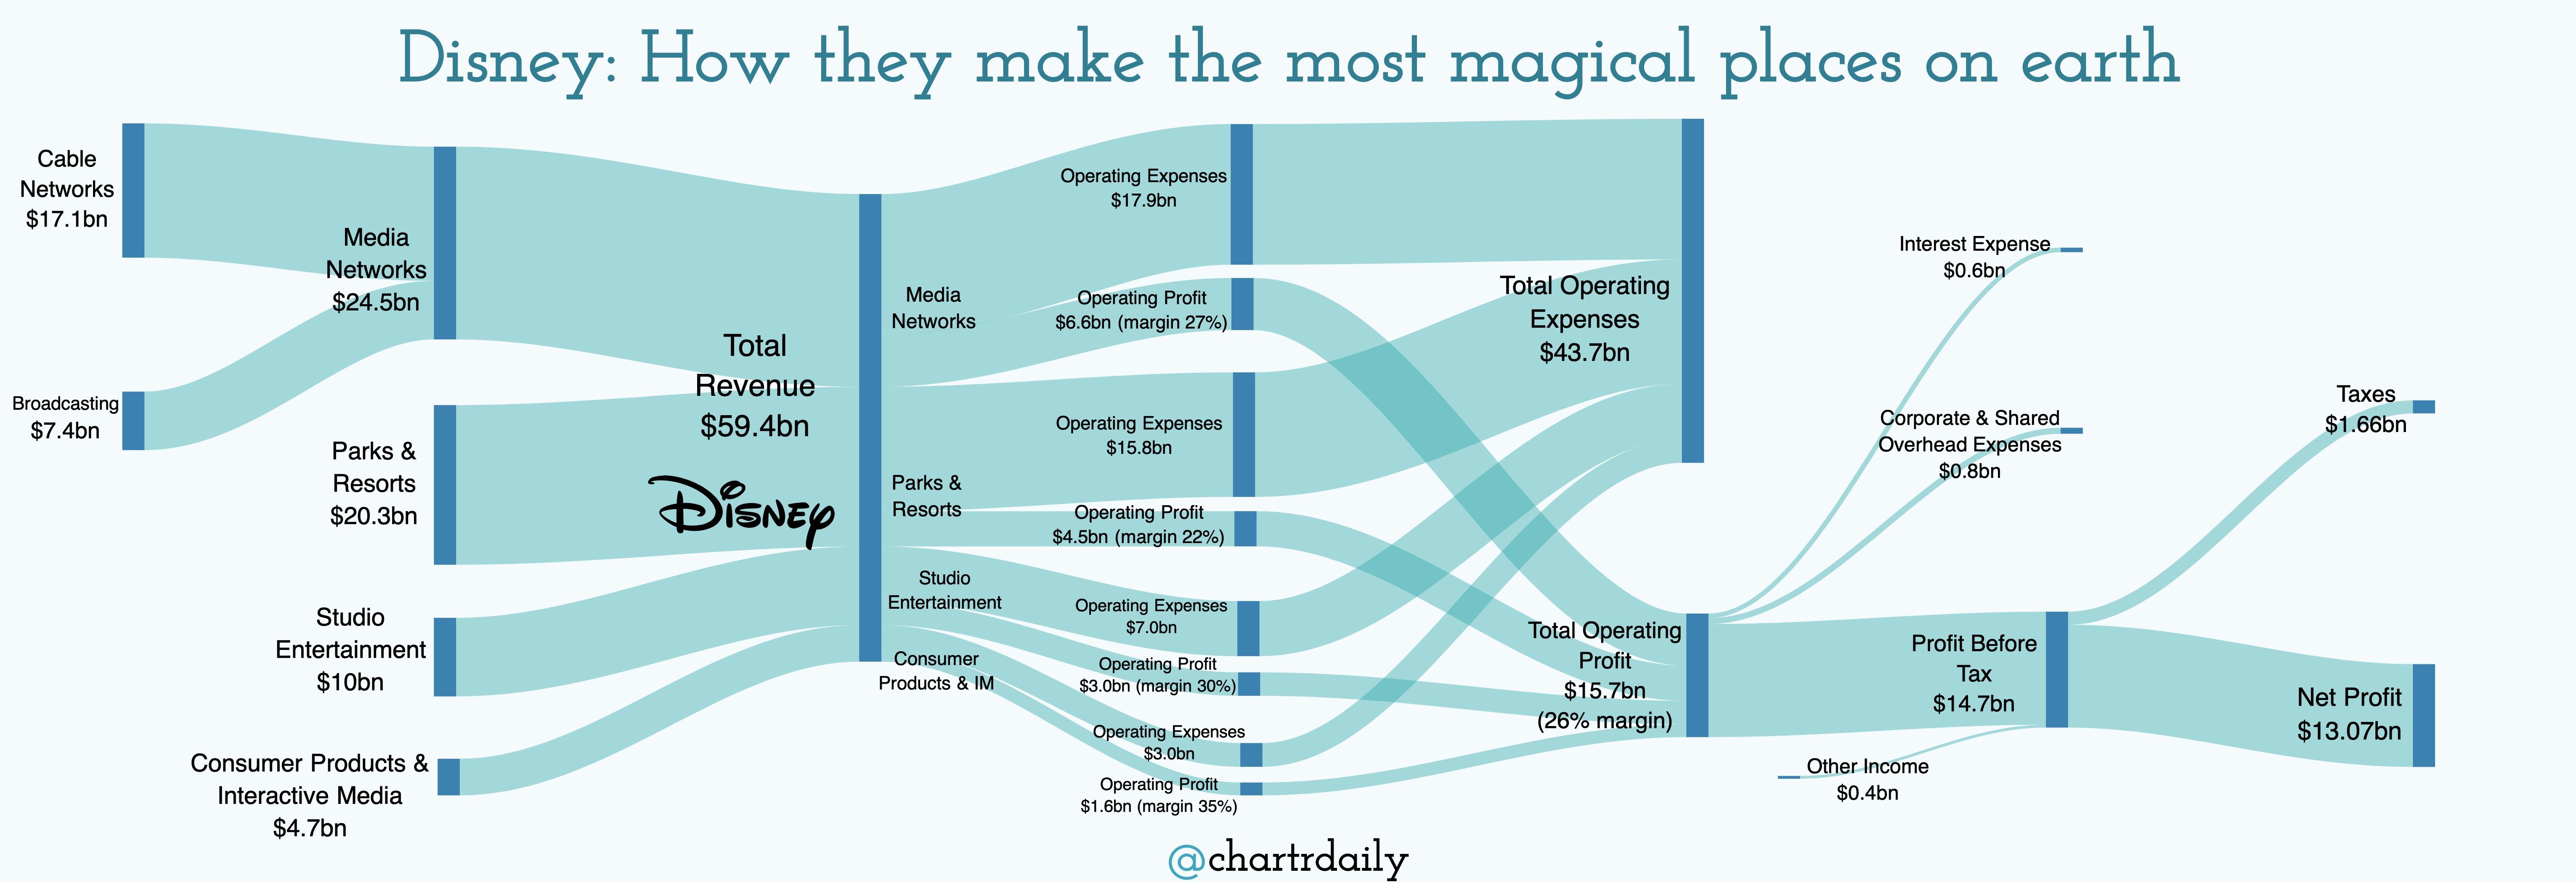 data visualization Disney's latest financial year, visualised. [OC